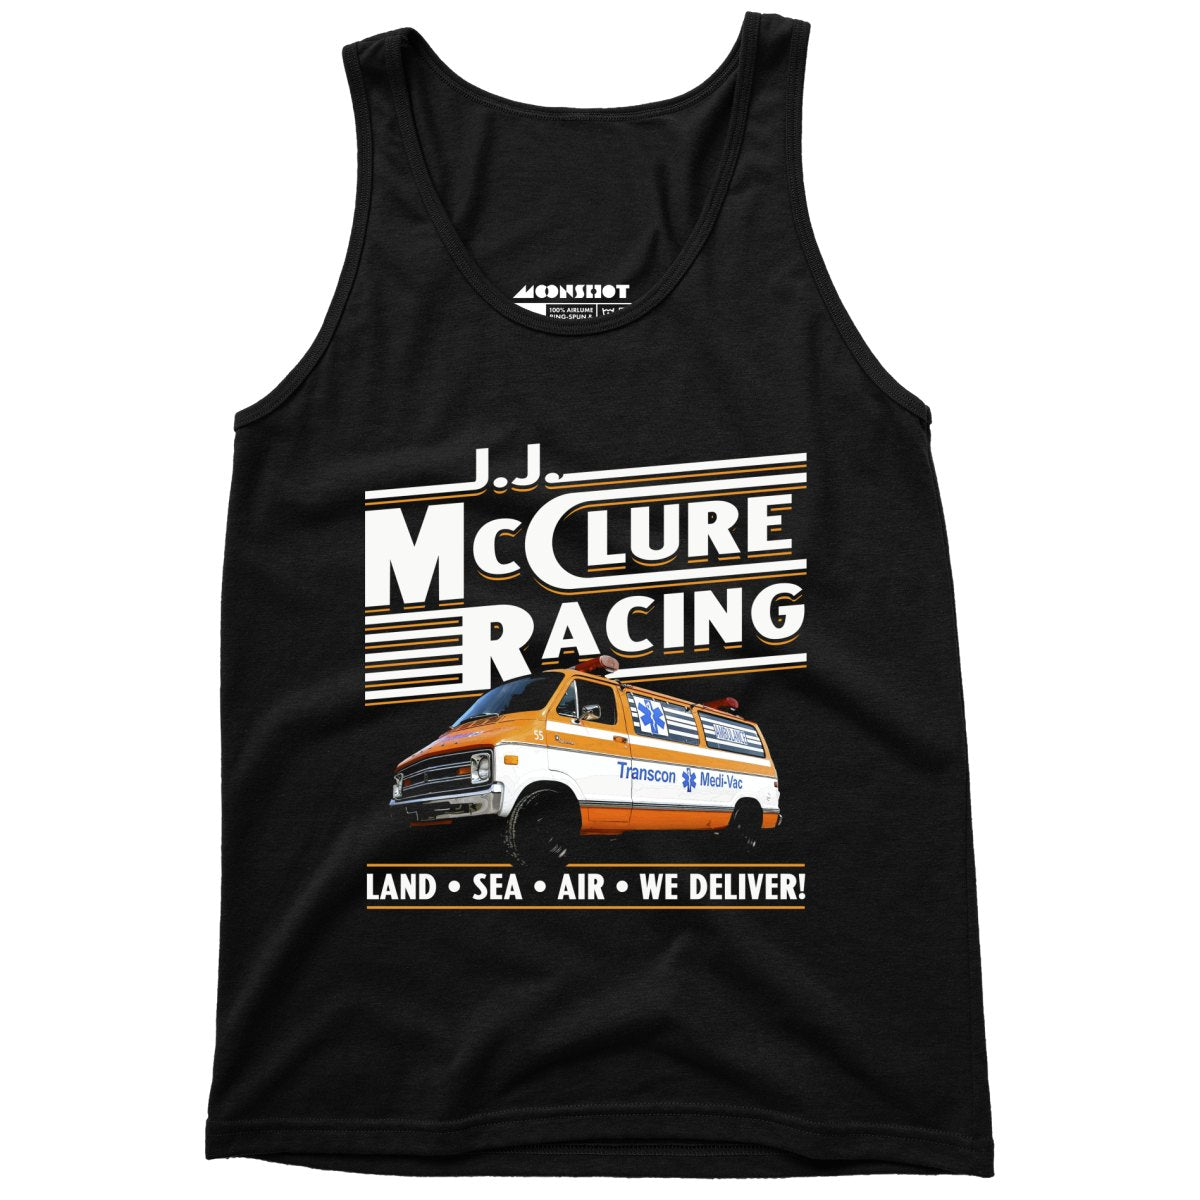 J.J. McClure Racing - Unisex Tank Top